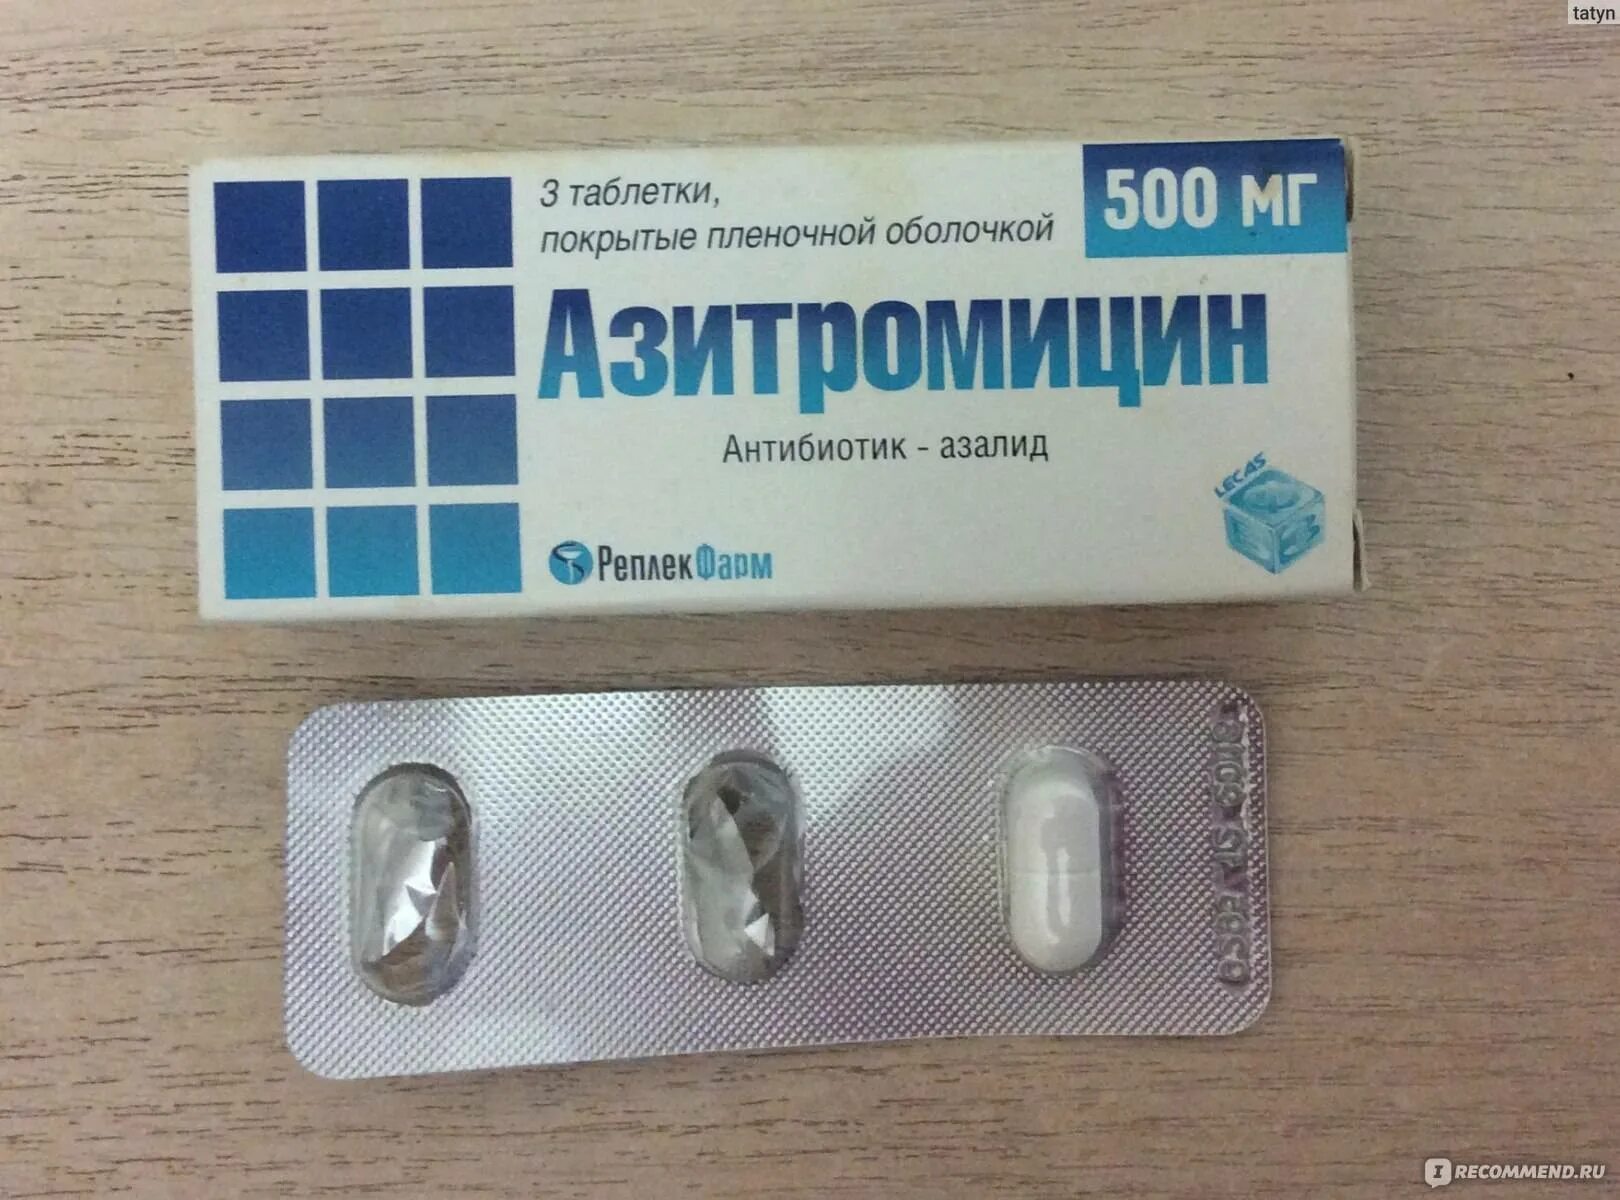 Какой антибиотик при сильном кашле. Антибиотик Азитромицин 500 мг. Антибиотик 3 таблетки в упаковке Азитромицин. Антибиотик от кашля 3 таблетки название. Сильный антибиотик от простуды 3 таблетки.